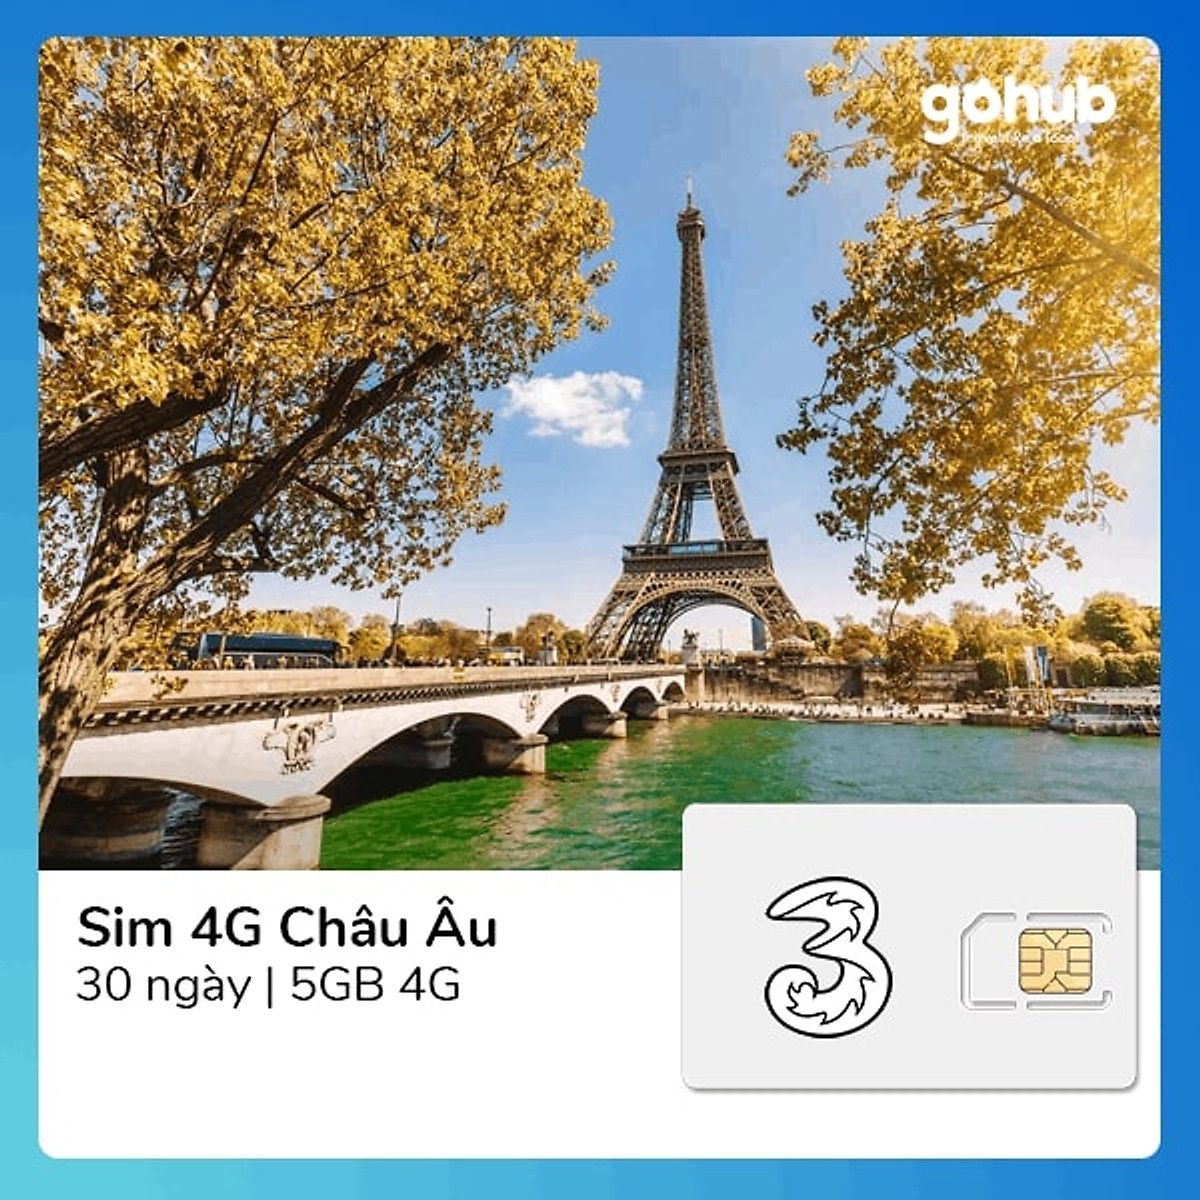 Gohub - Sim 4G Châu Âu + Thế giới 5GB (Gọi + DATA)